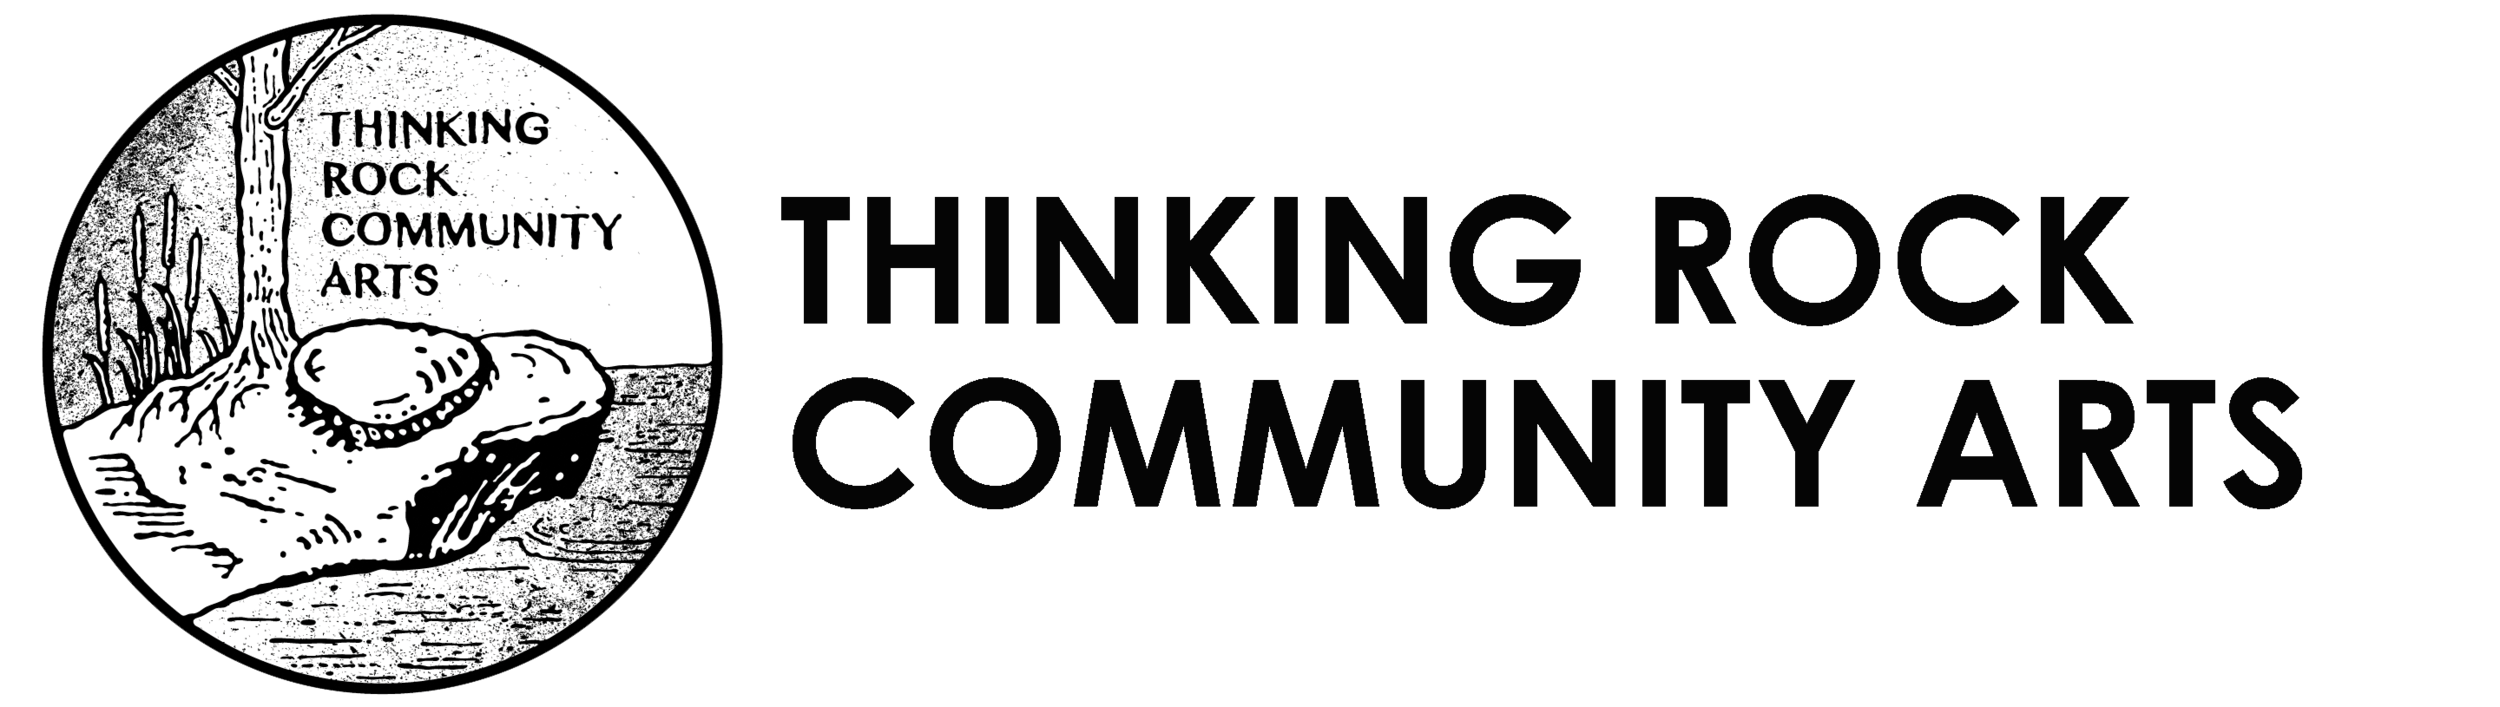 Thinking Rock Community Arts